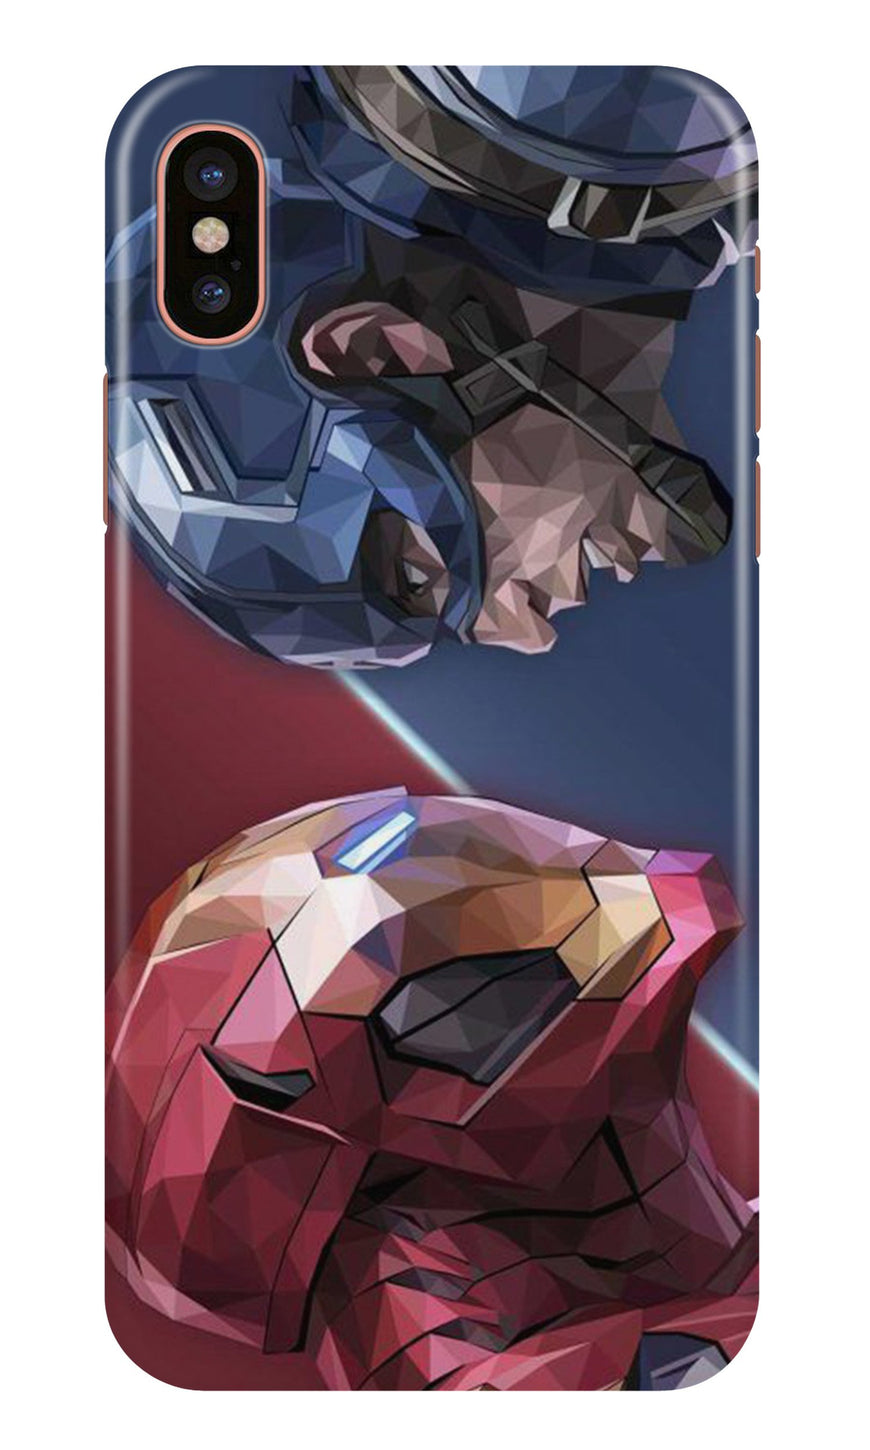 Ironman Captain America Case for iPhone X (Design No. 245)